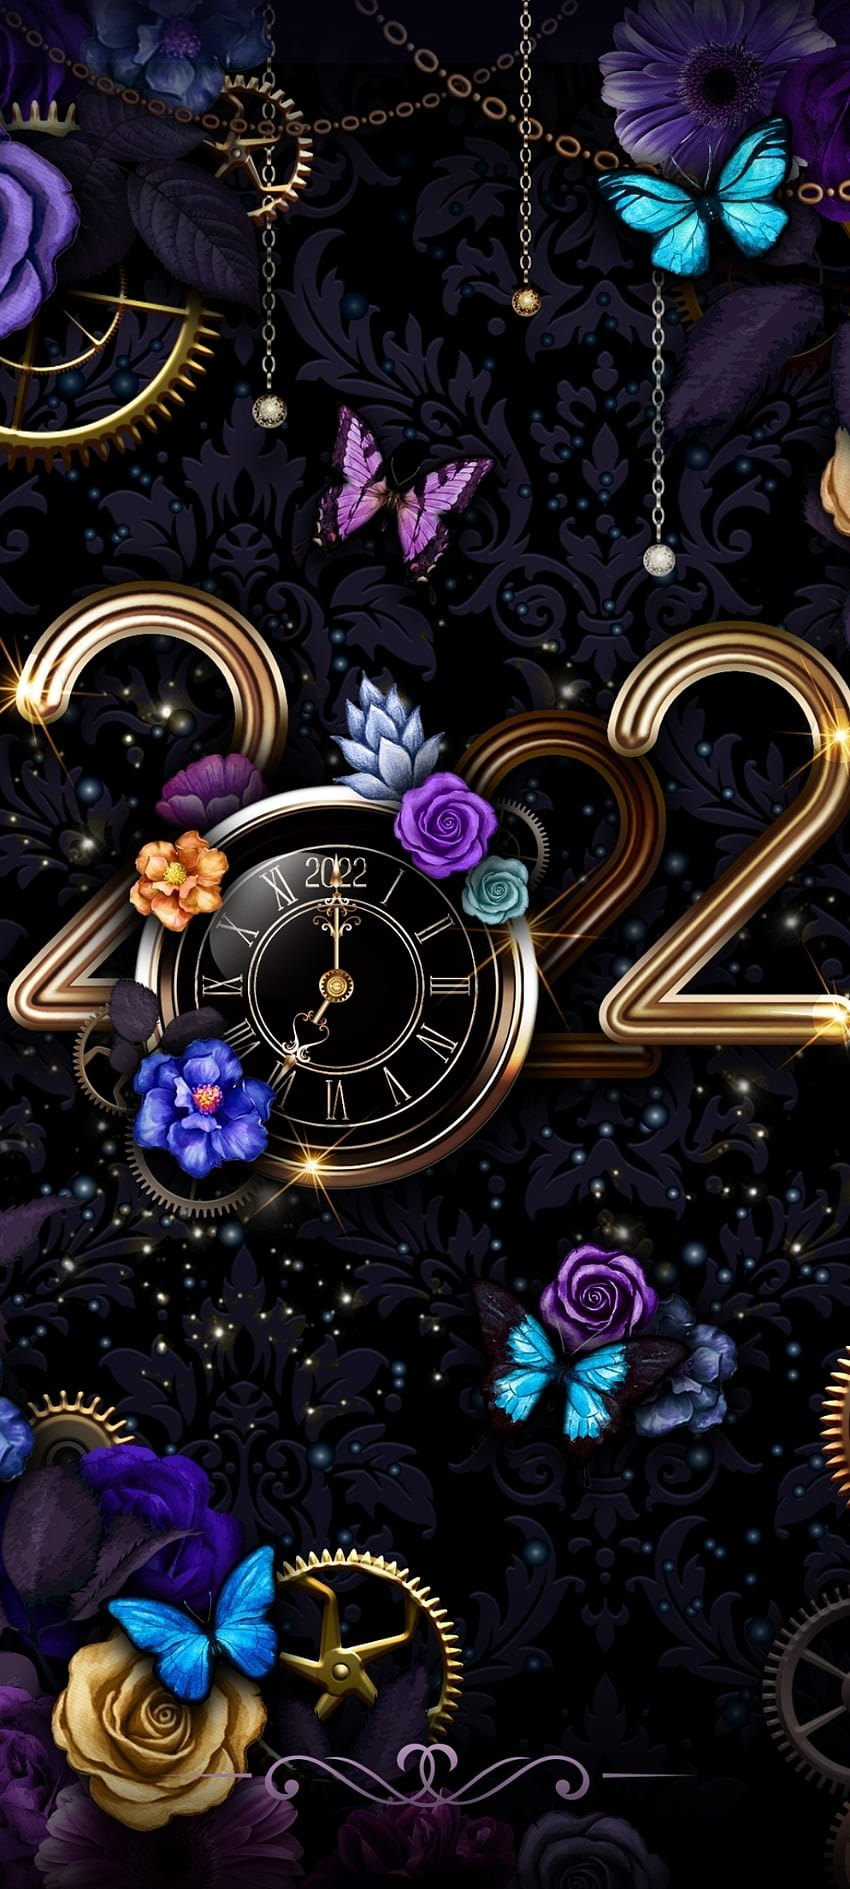 Borboleta e Rosa, azul elétrico, arte, Natal, festival, escuro, 2022, Ano Novo, relógio, flor Papel de parede de celular HD